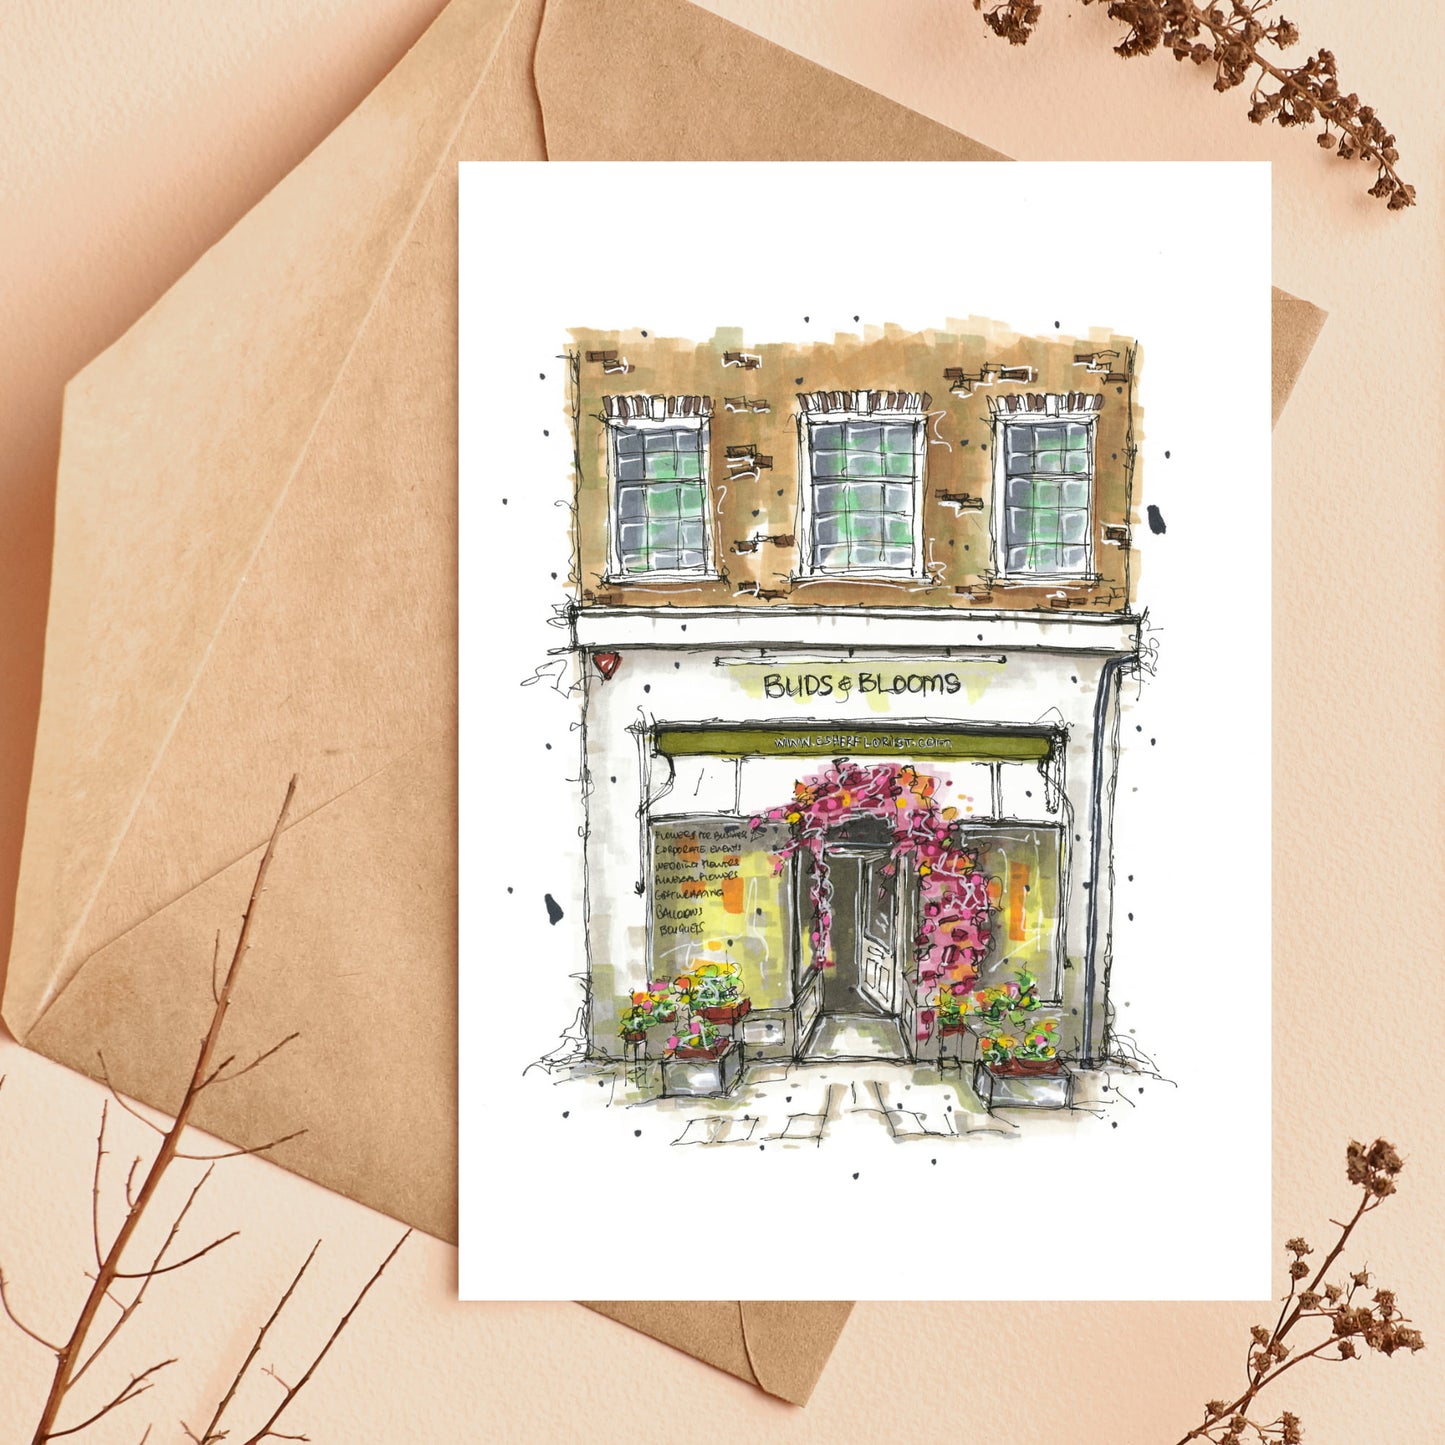 DTS0038 - Buds & Blooms, Storefront Sketch, Greeting Card with Envelope, Downtown Sketcher, Wynand van Niekerk 